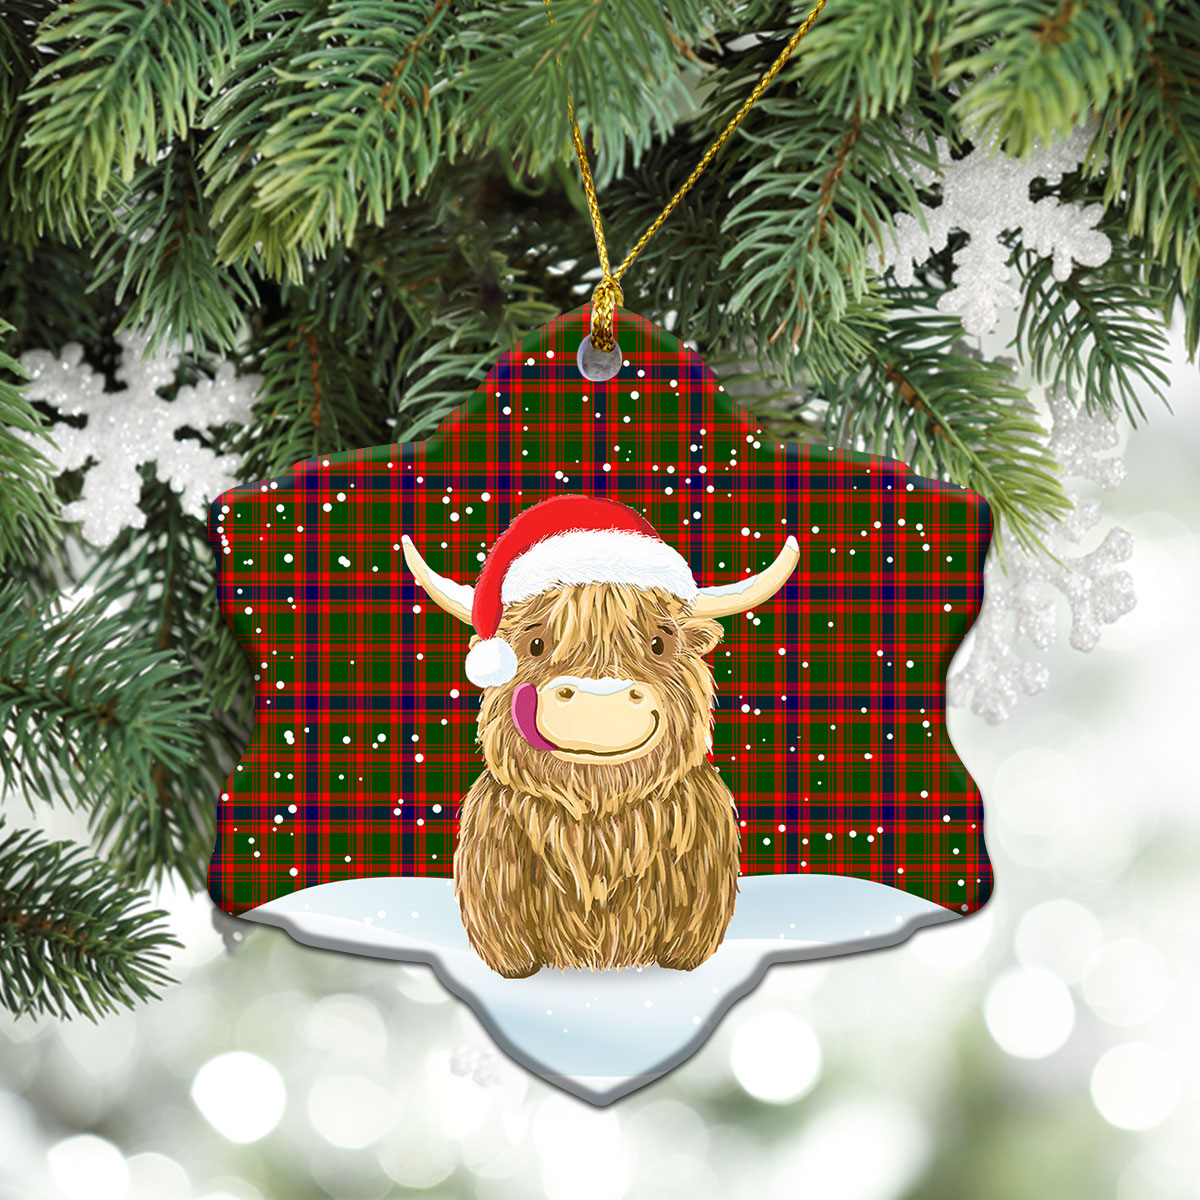 Kinninmont Tartan Christmas Ceramic Ornament - Highland Cows Style